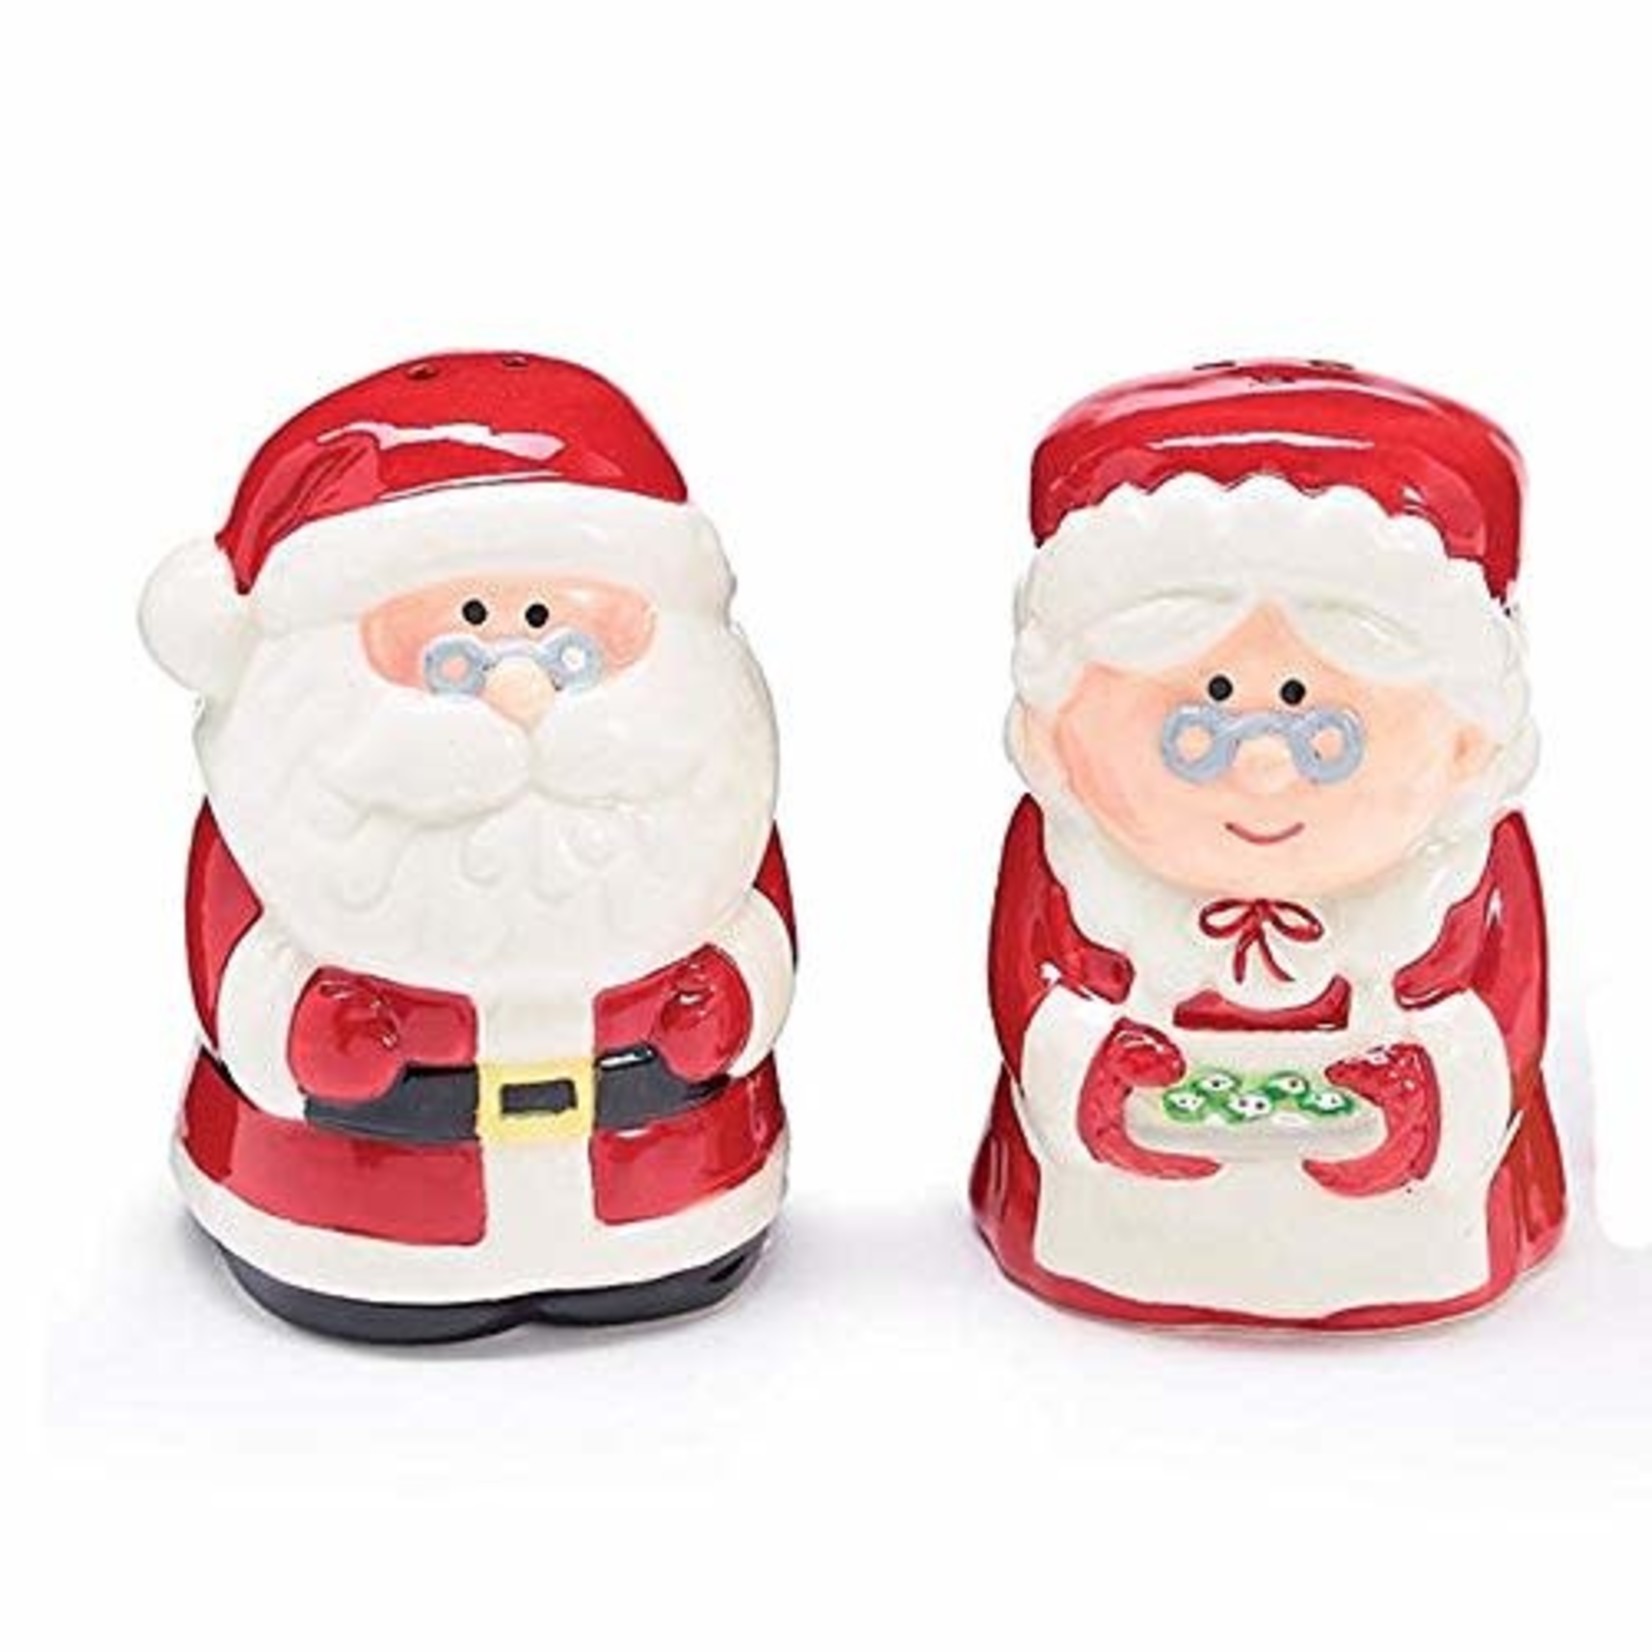 Mr.&Mrs. Santa Claus S&P